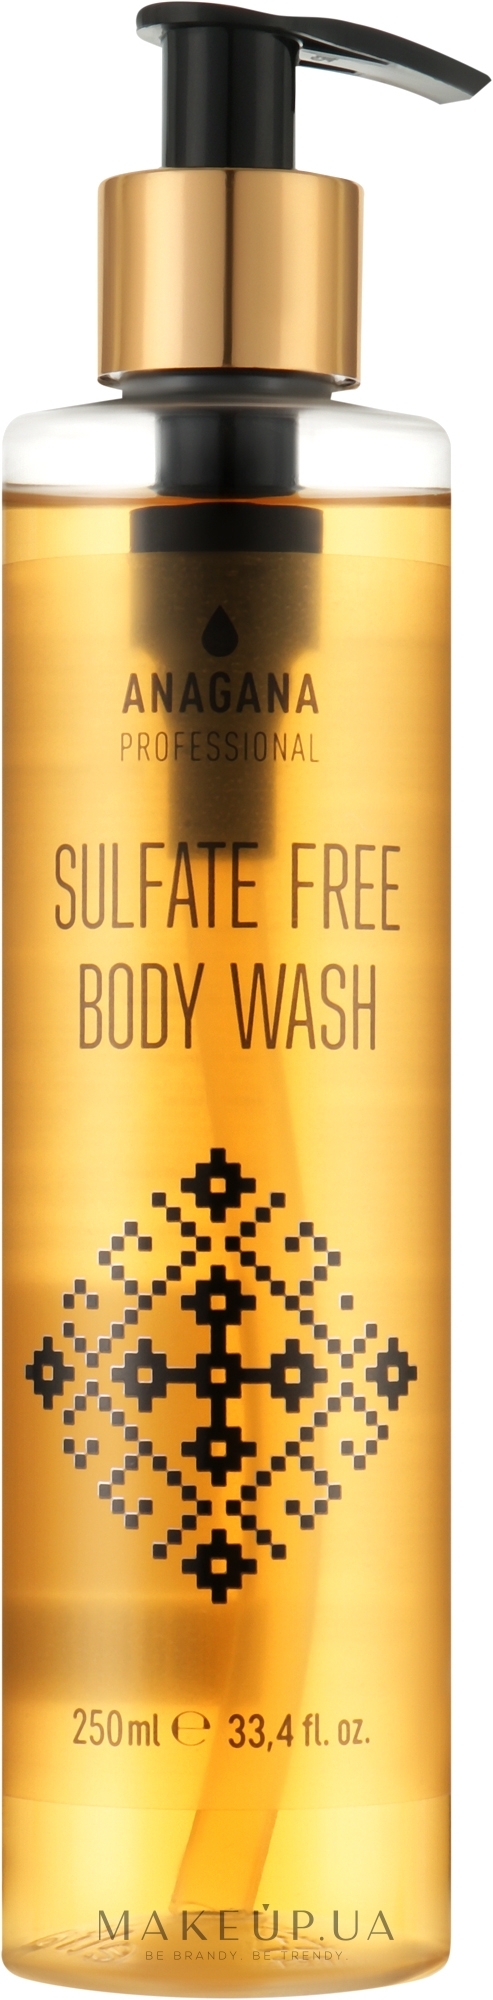 Безсульфатний гель для душу - Anagana Professional Sulfate Free Body Wash — фото 250ml